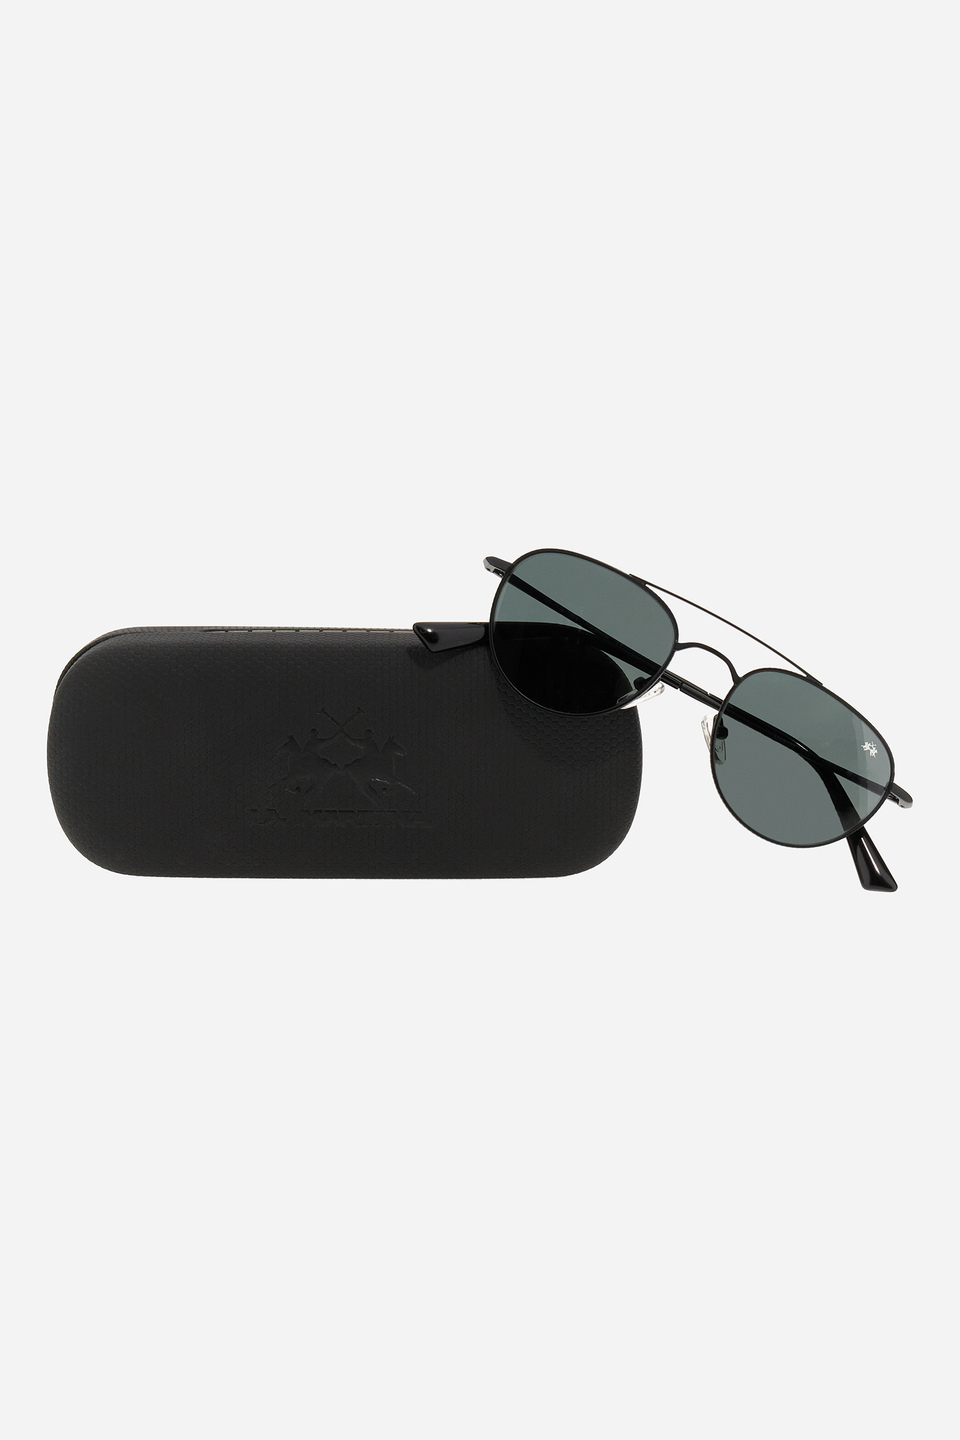 Sonnenbrille mit tropfenförmigem Metallrahmen | La Martina - Official Online Shop